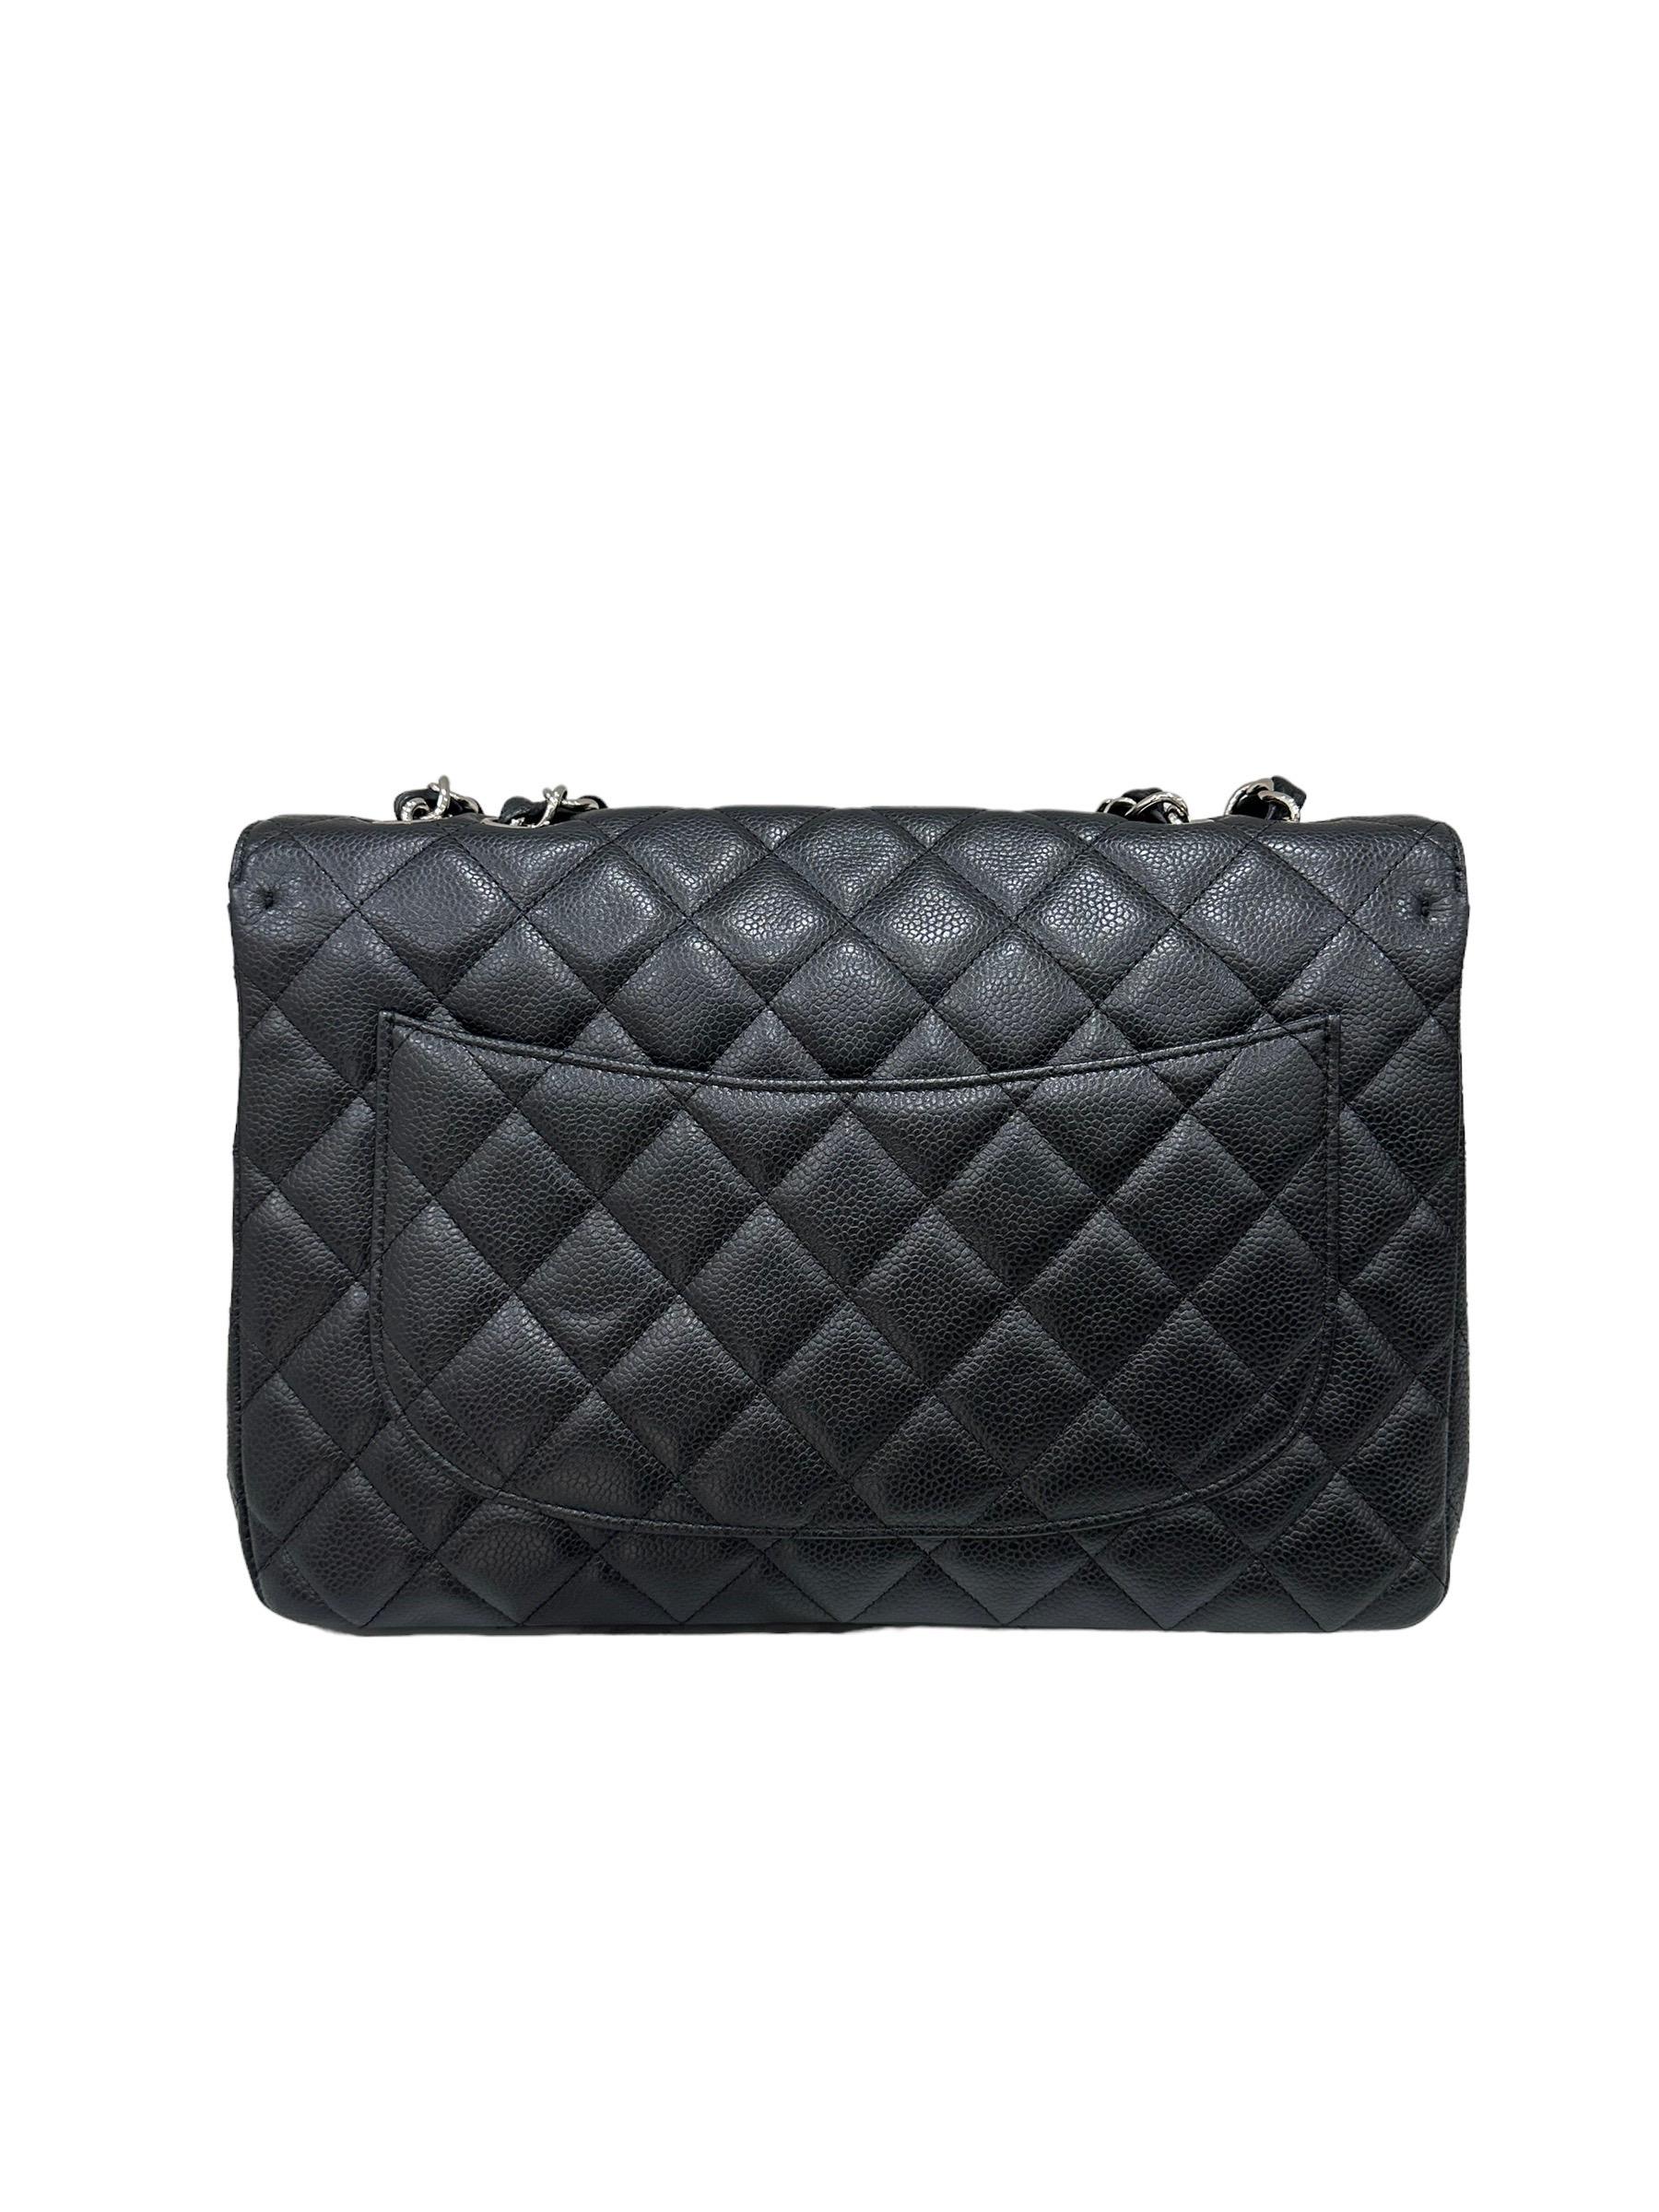 2009 Chanel Jumbo Black Caviar Leather Top Shoulder Bag  For Sale 4